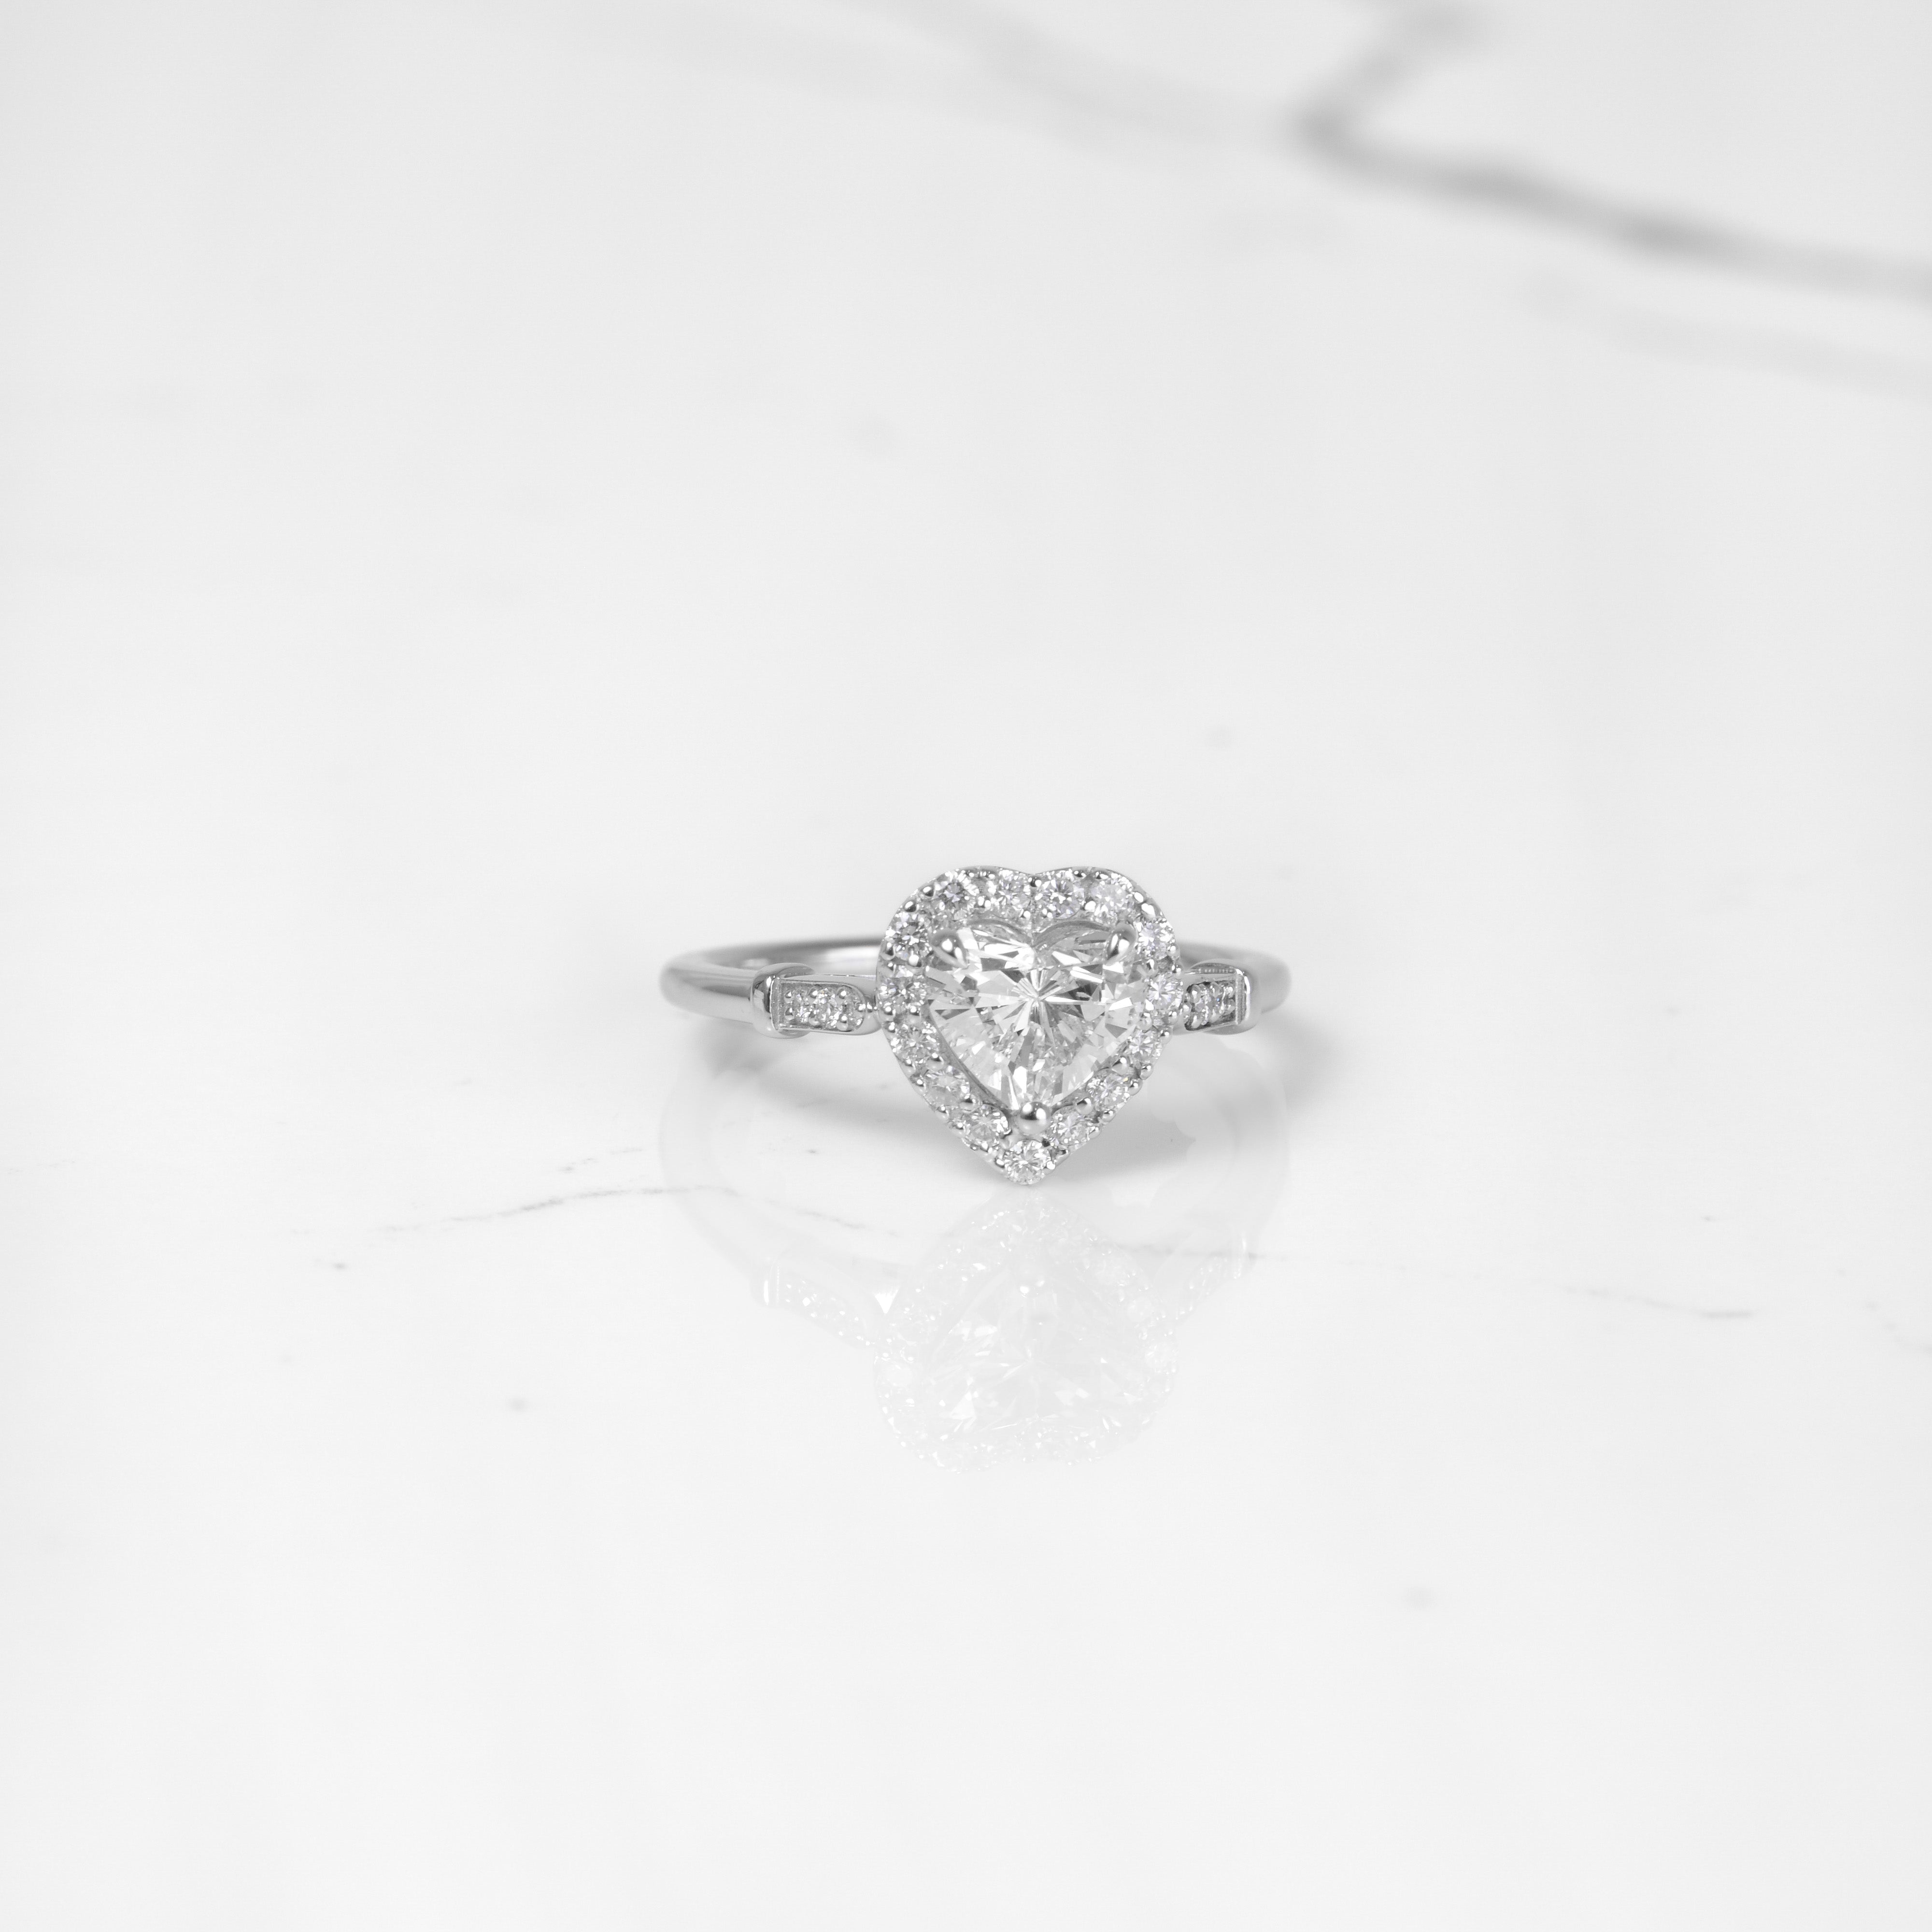 Heart Engagement Rings - Romantic Settings for Diamonds